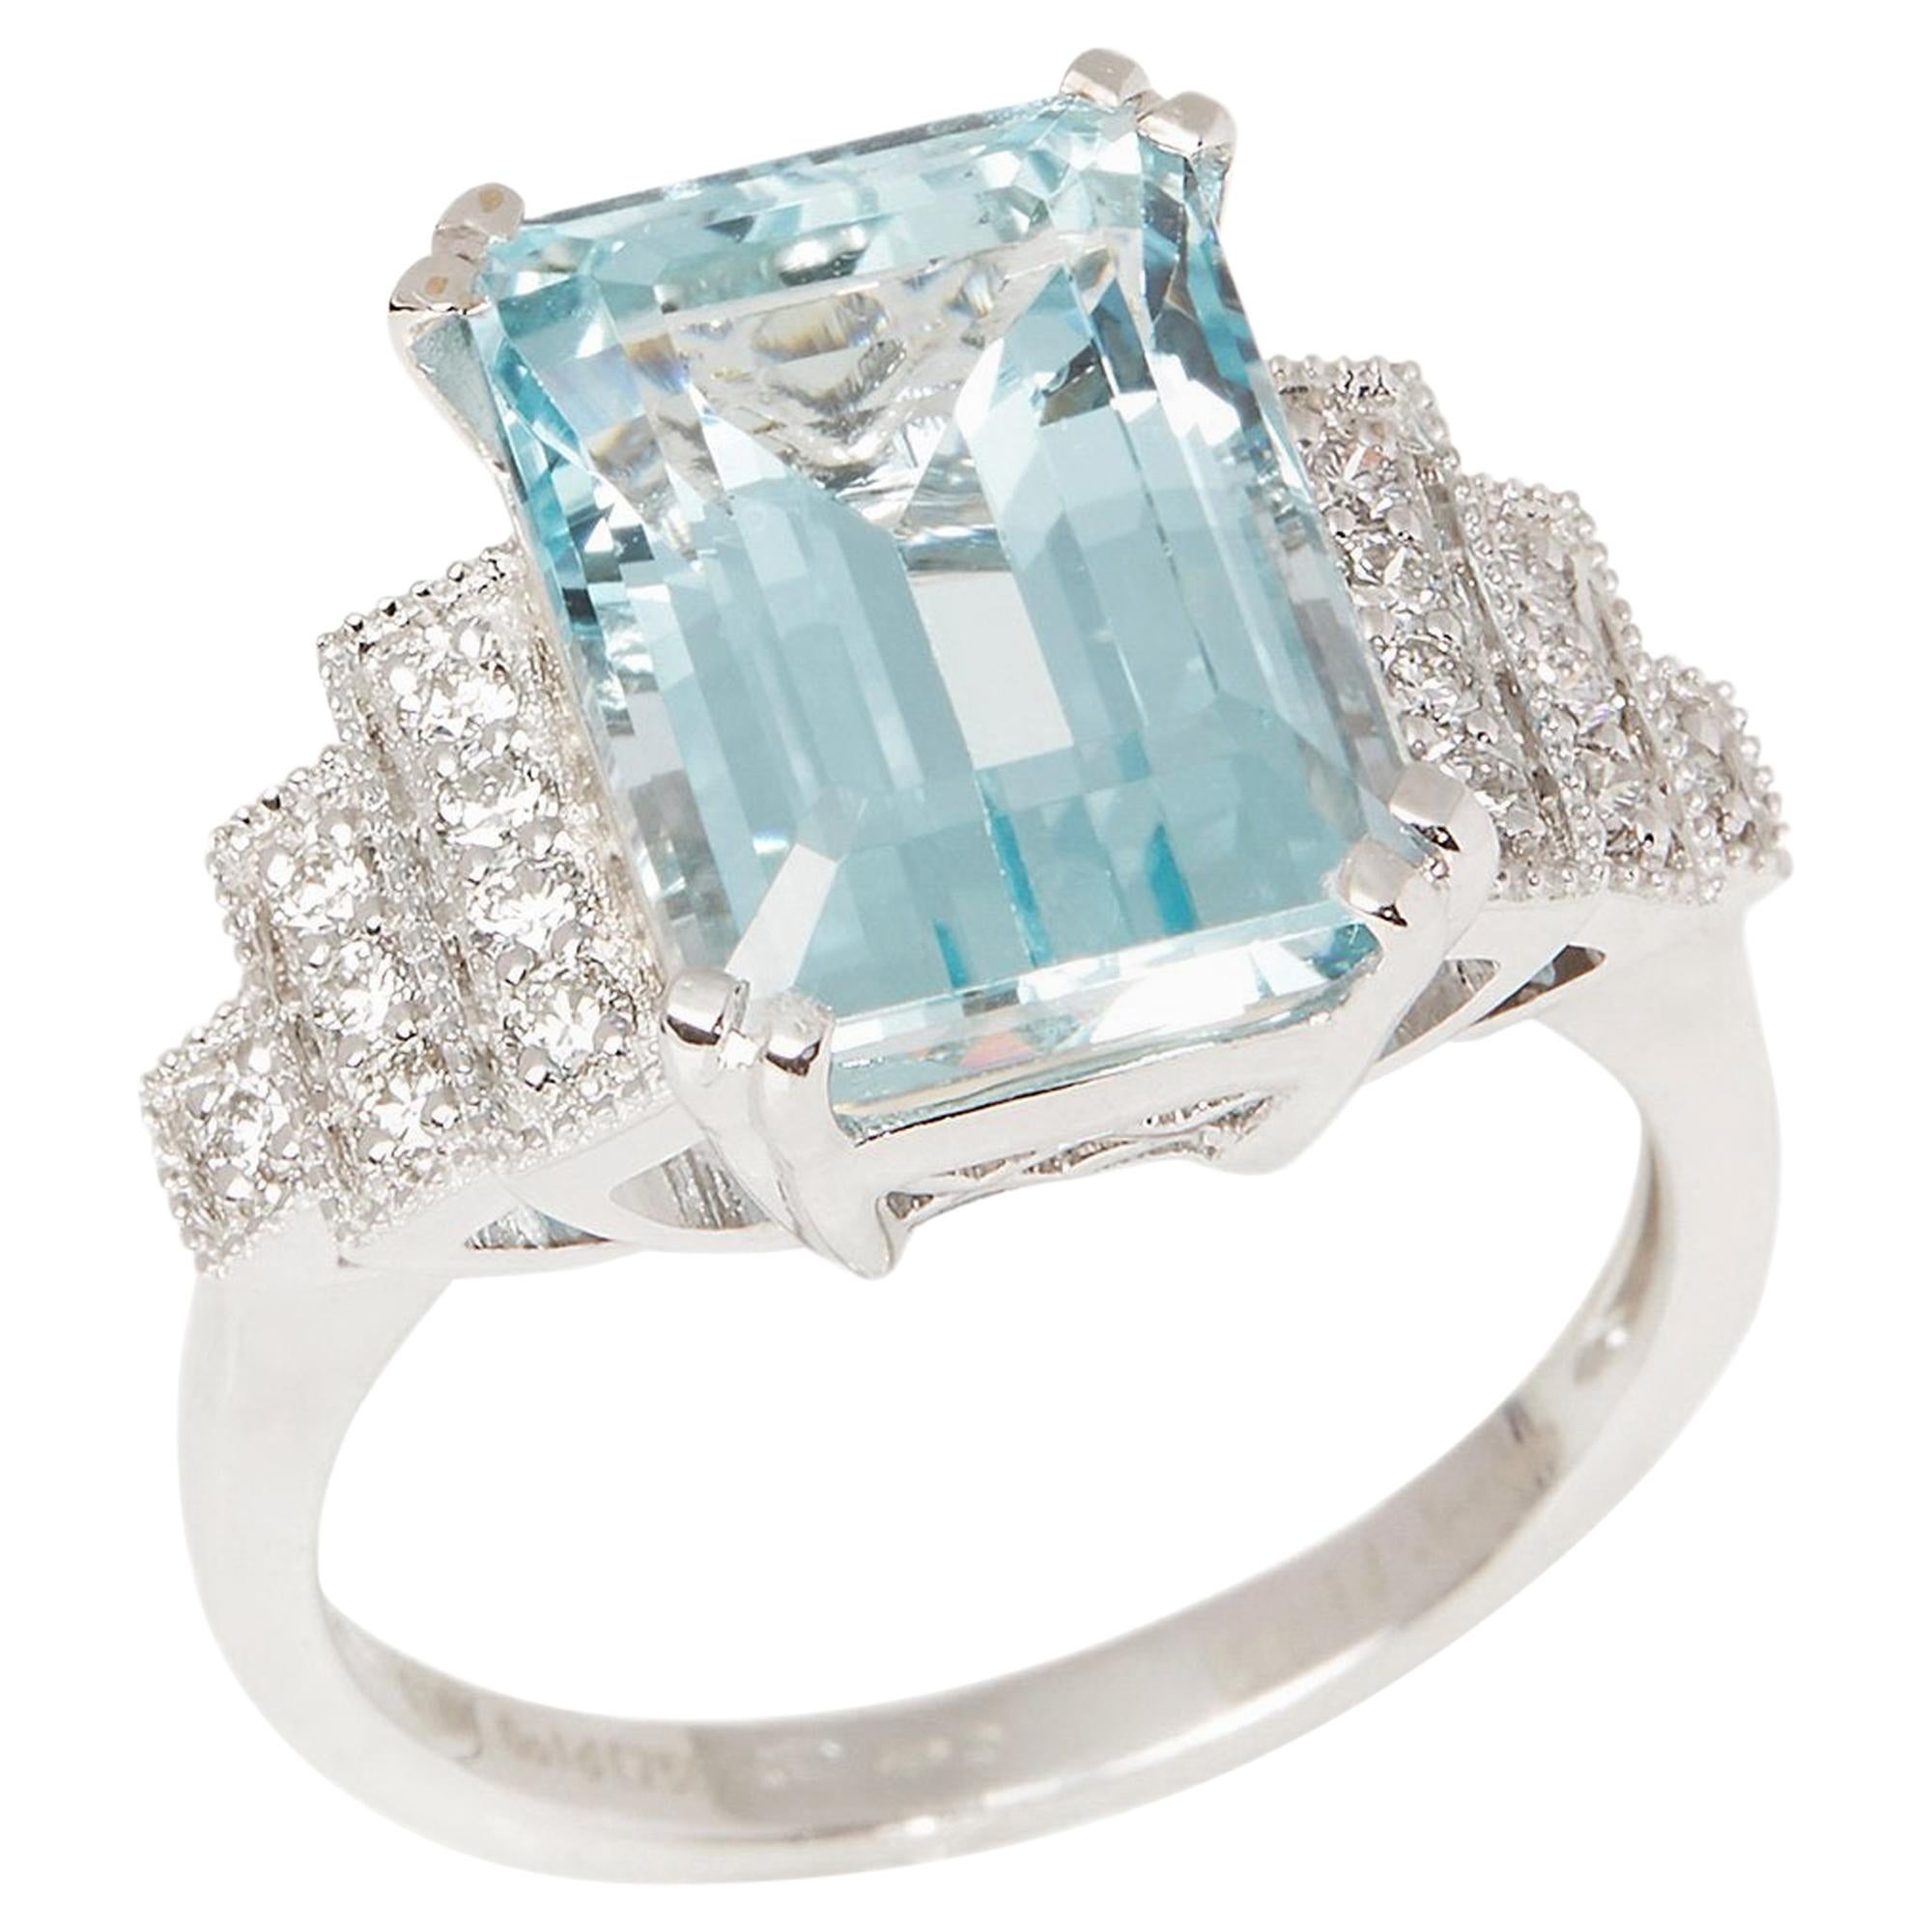 Certified 6.63ct Emerald cut Aquamarine and Diamond 18ct gold Ring